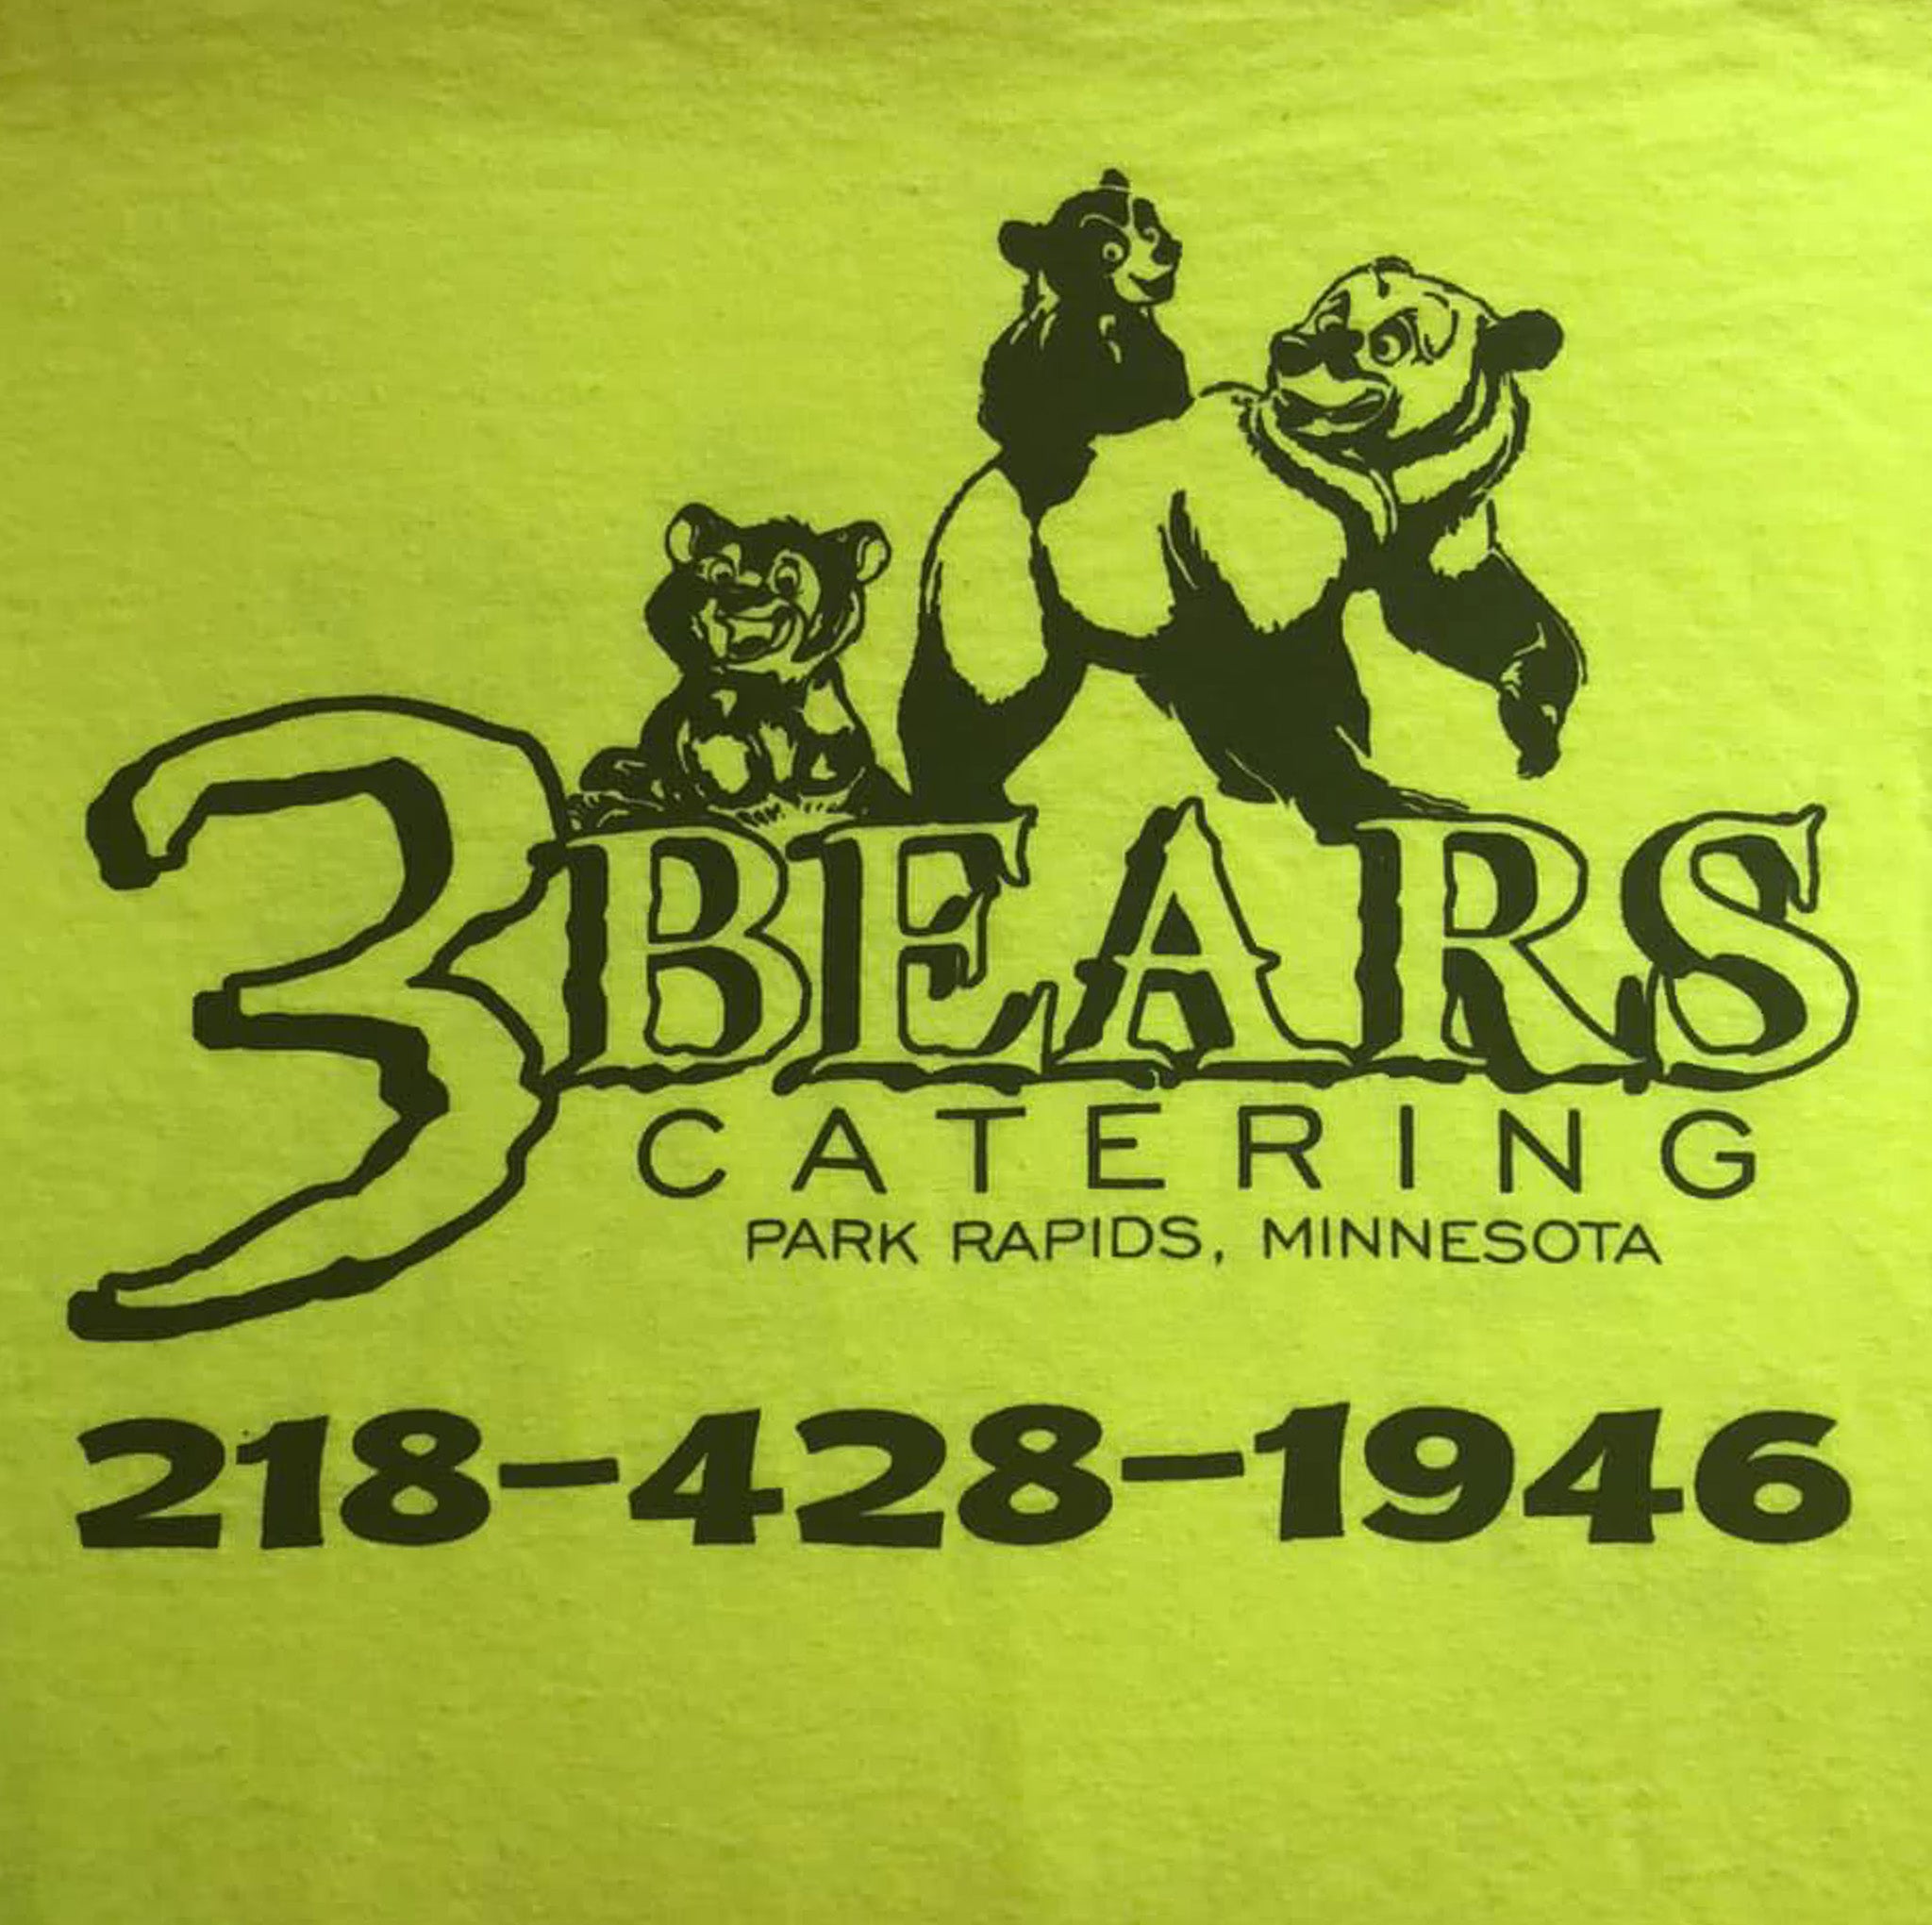 3 Bear Catering